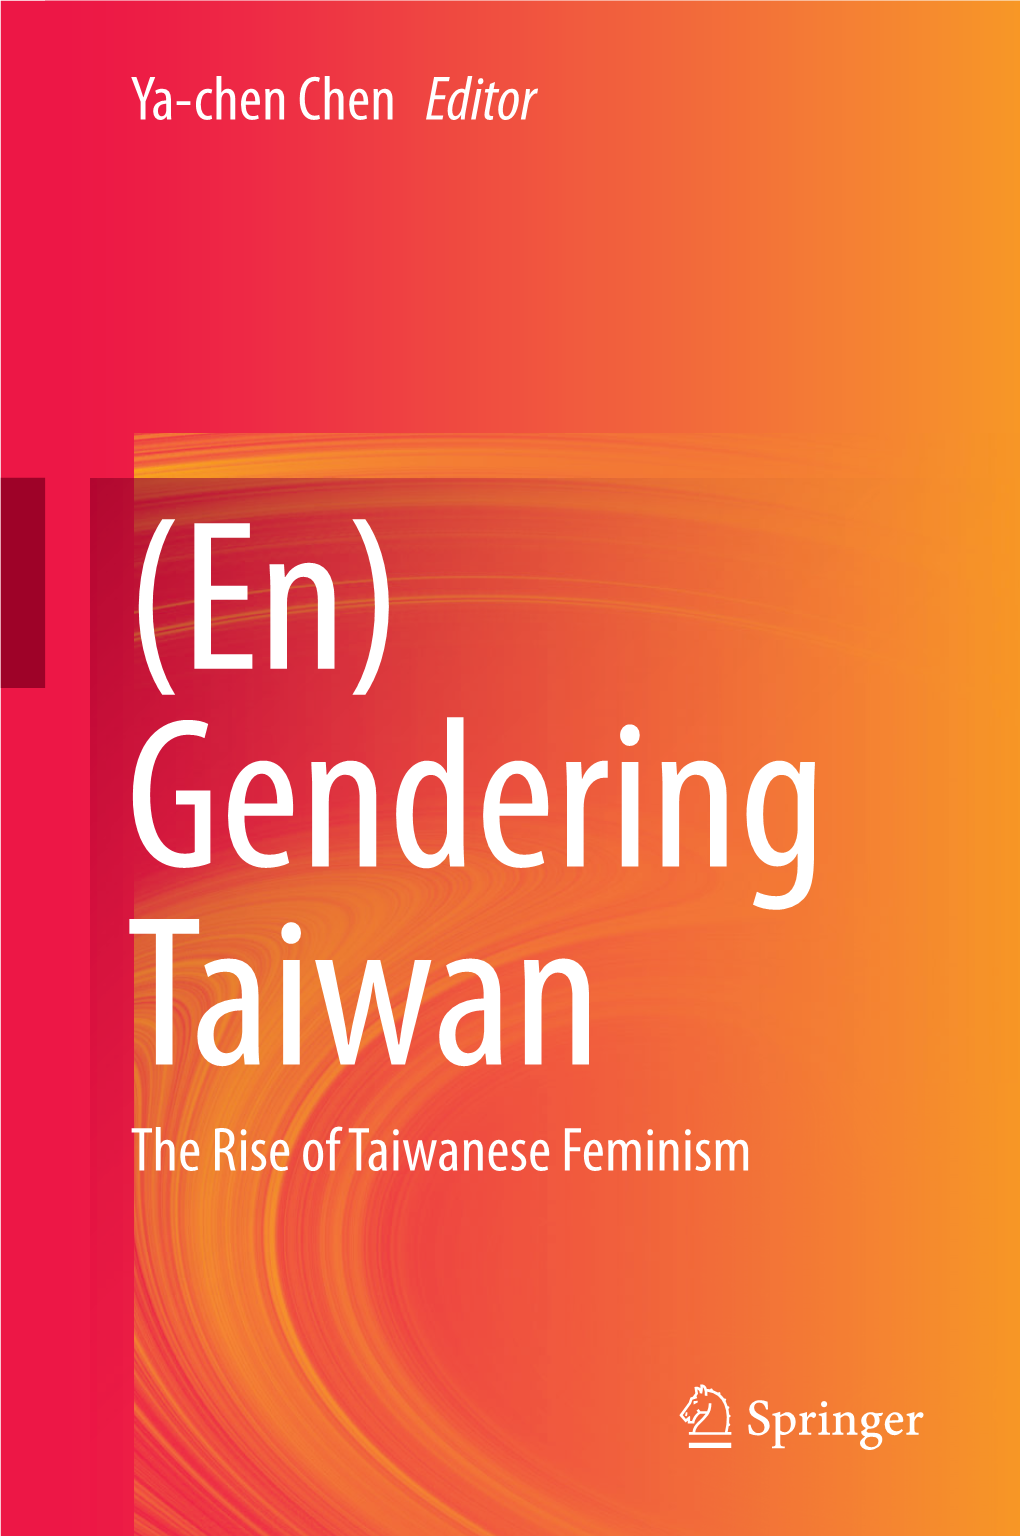 Ya-Chen Chen Editor the Rise of Taiwanese Feminism